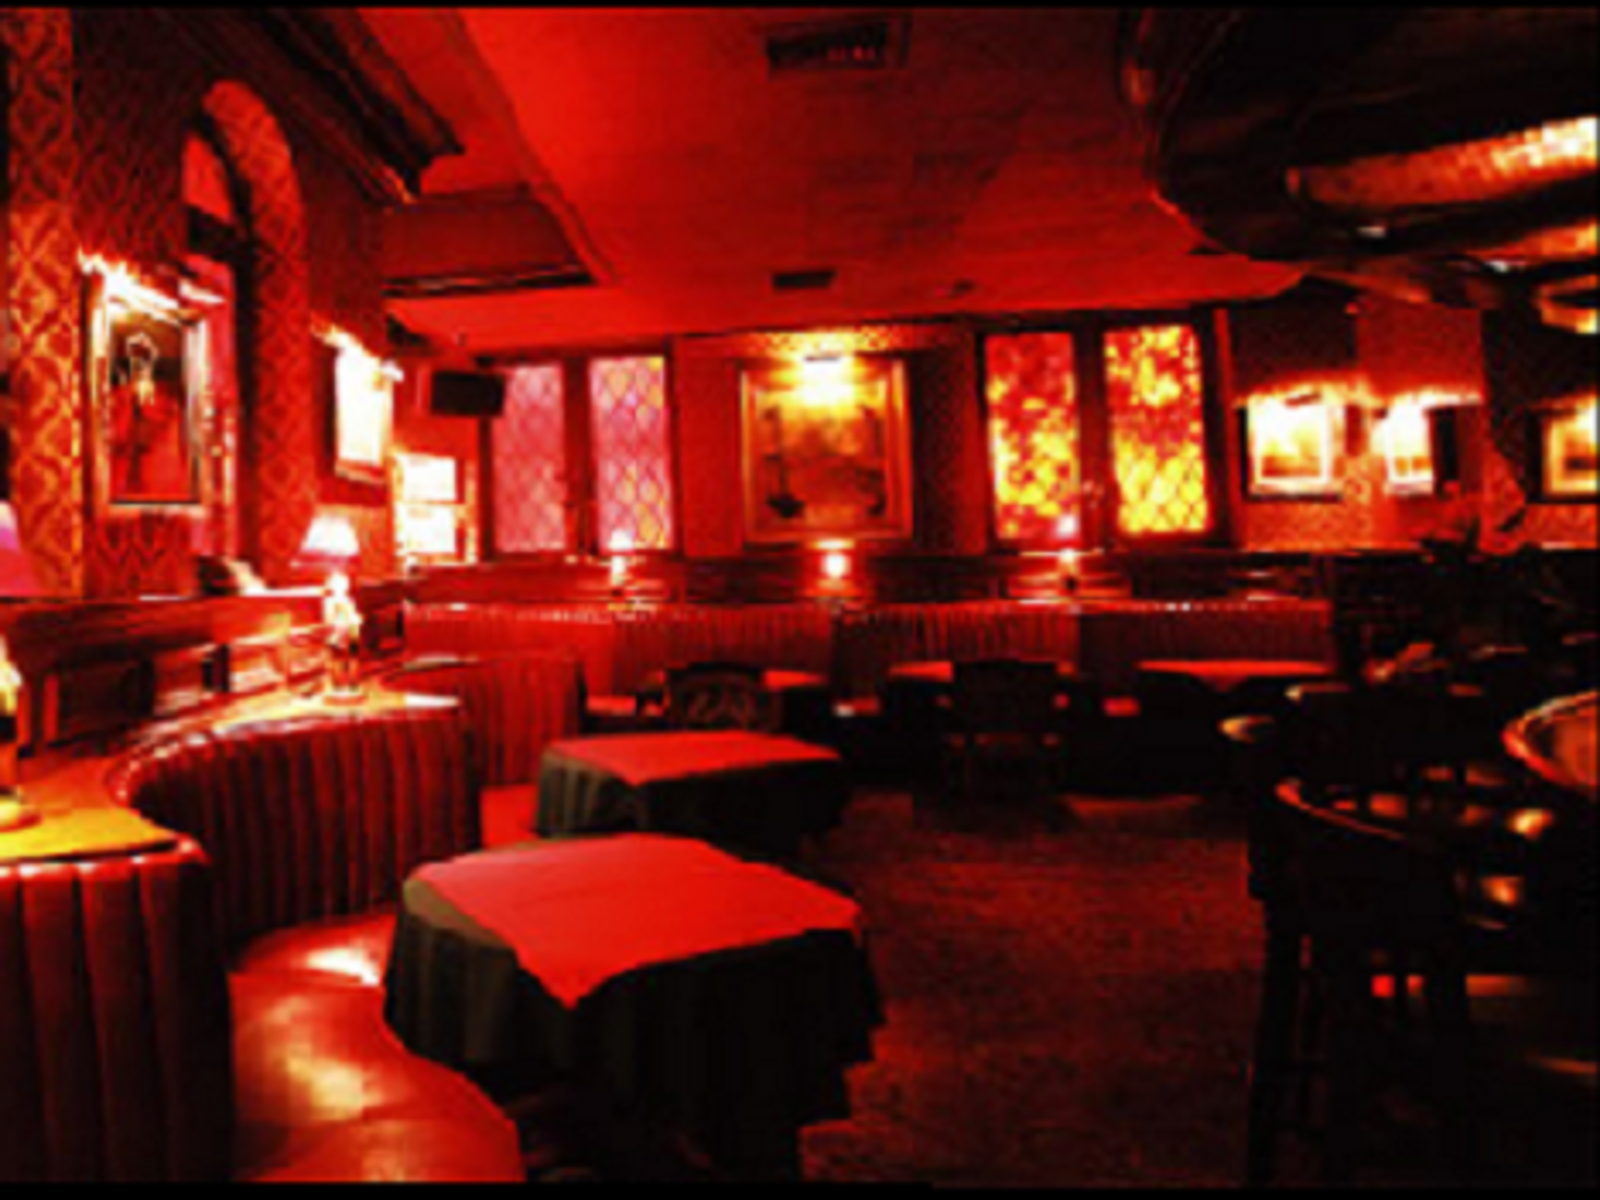 The Prince Restaurant & Bar